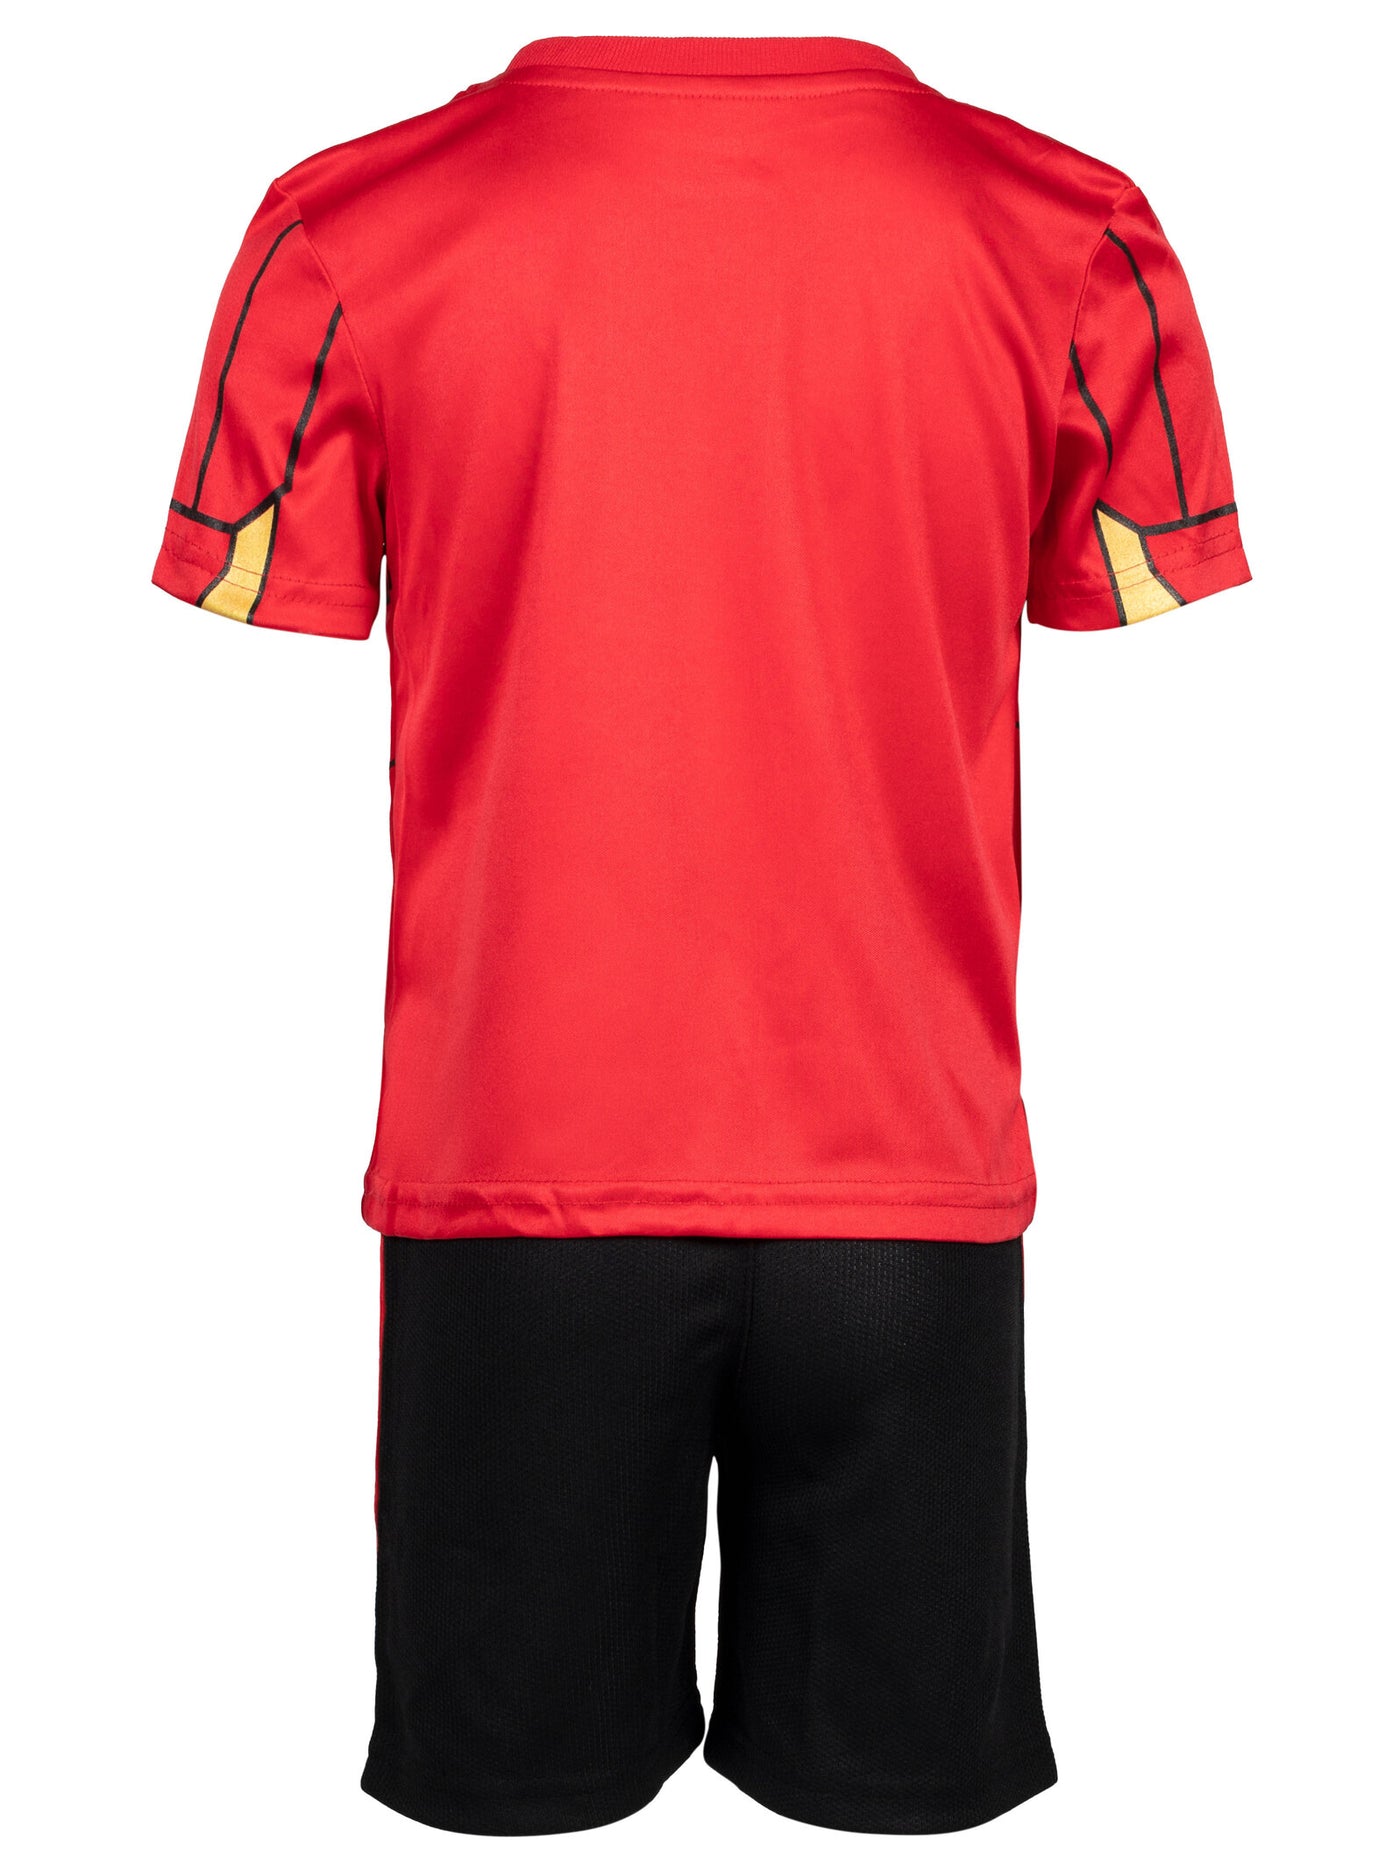 Marvel Avengers Iron Man Mesh Athletic T-Shirt Shorts Outfit Set